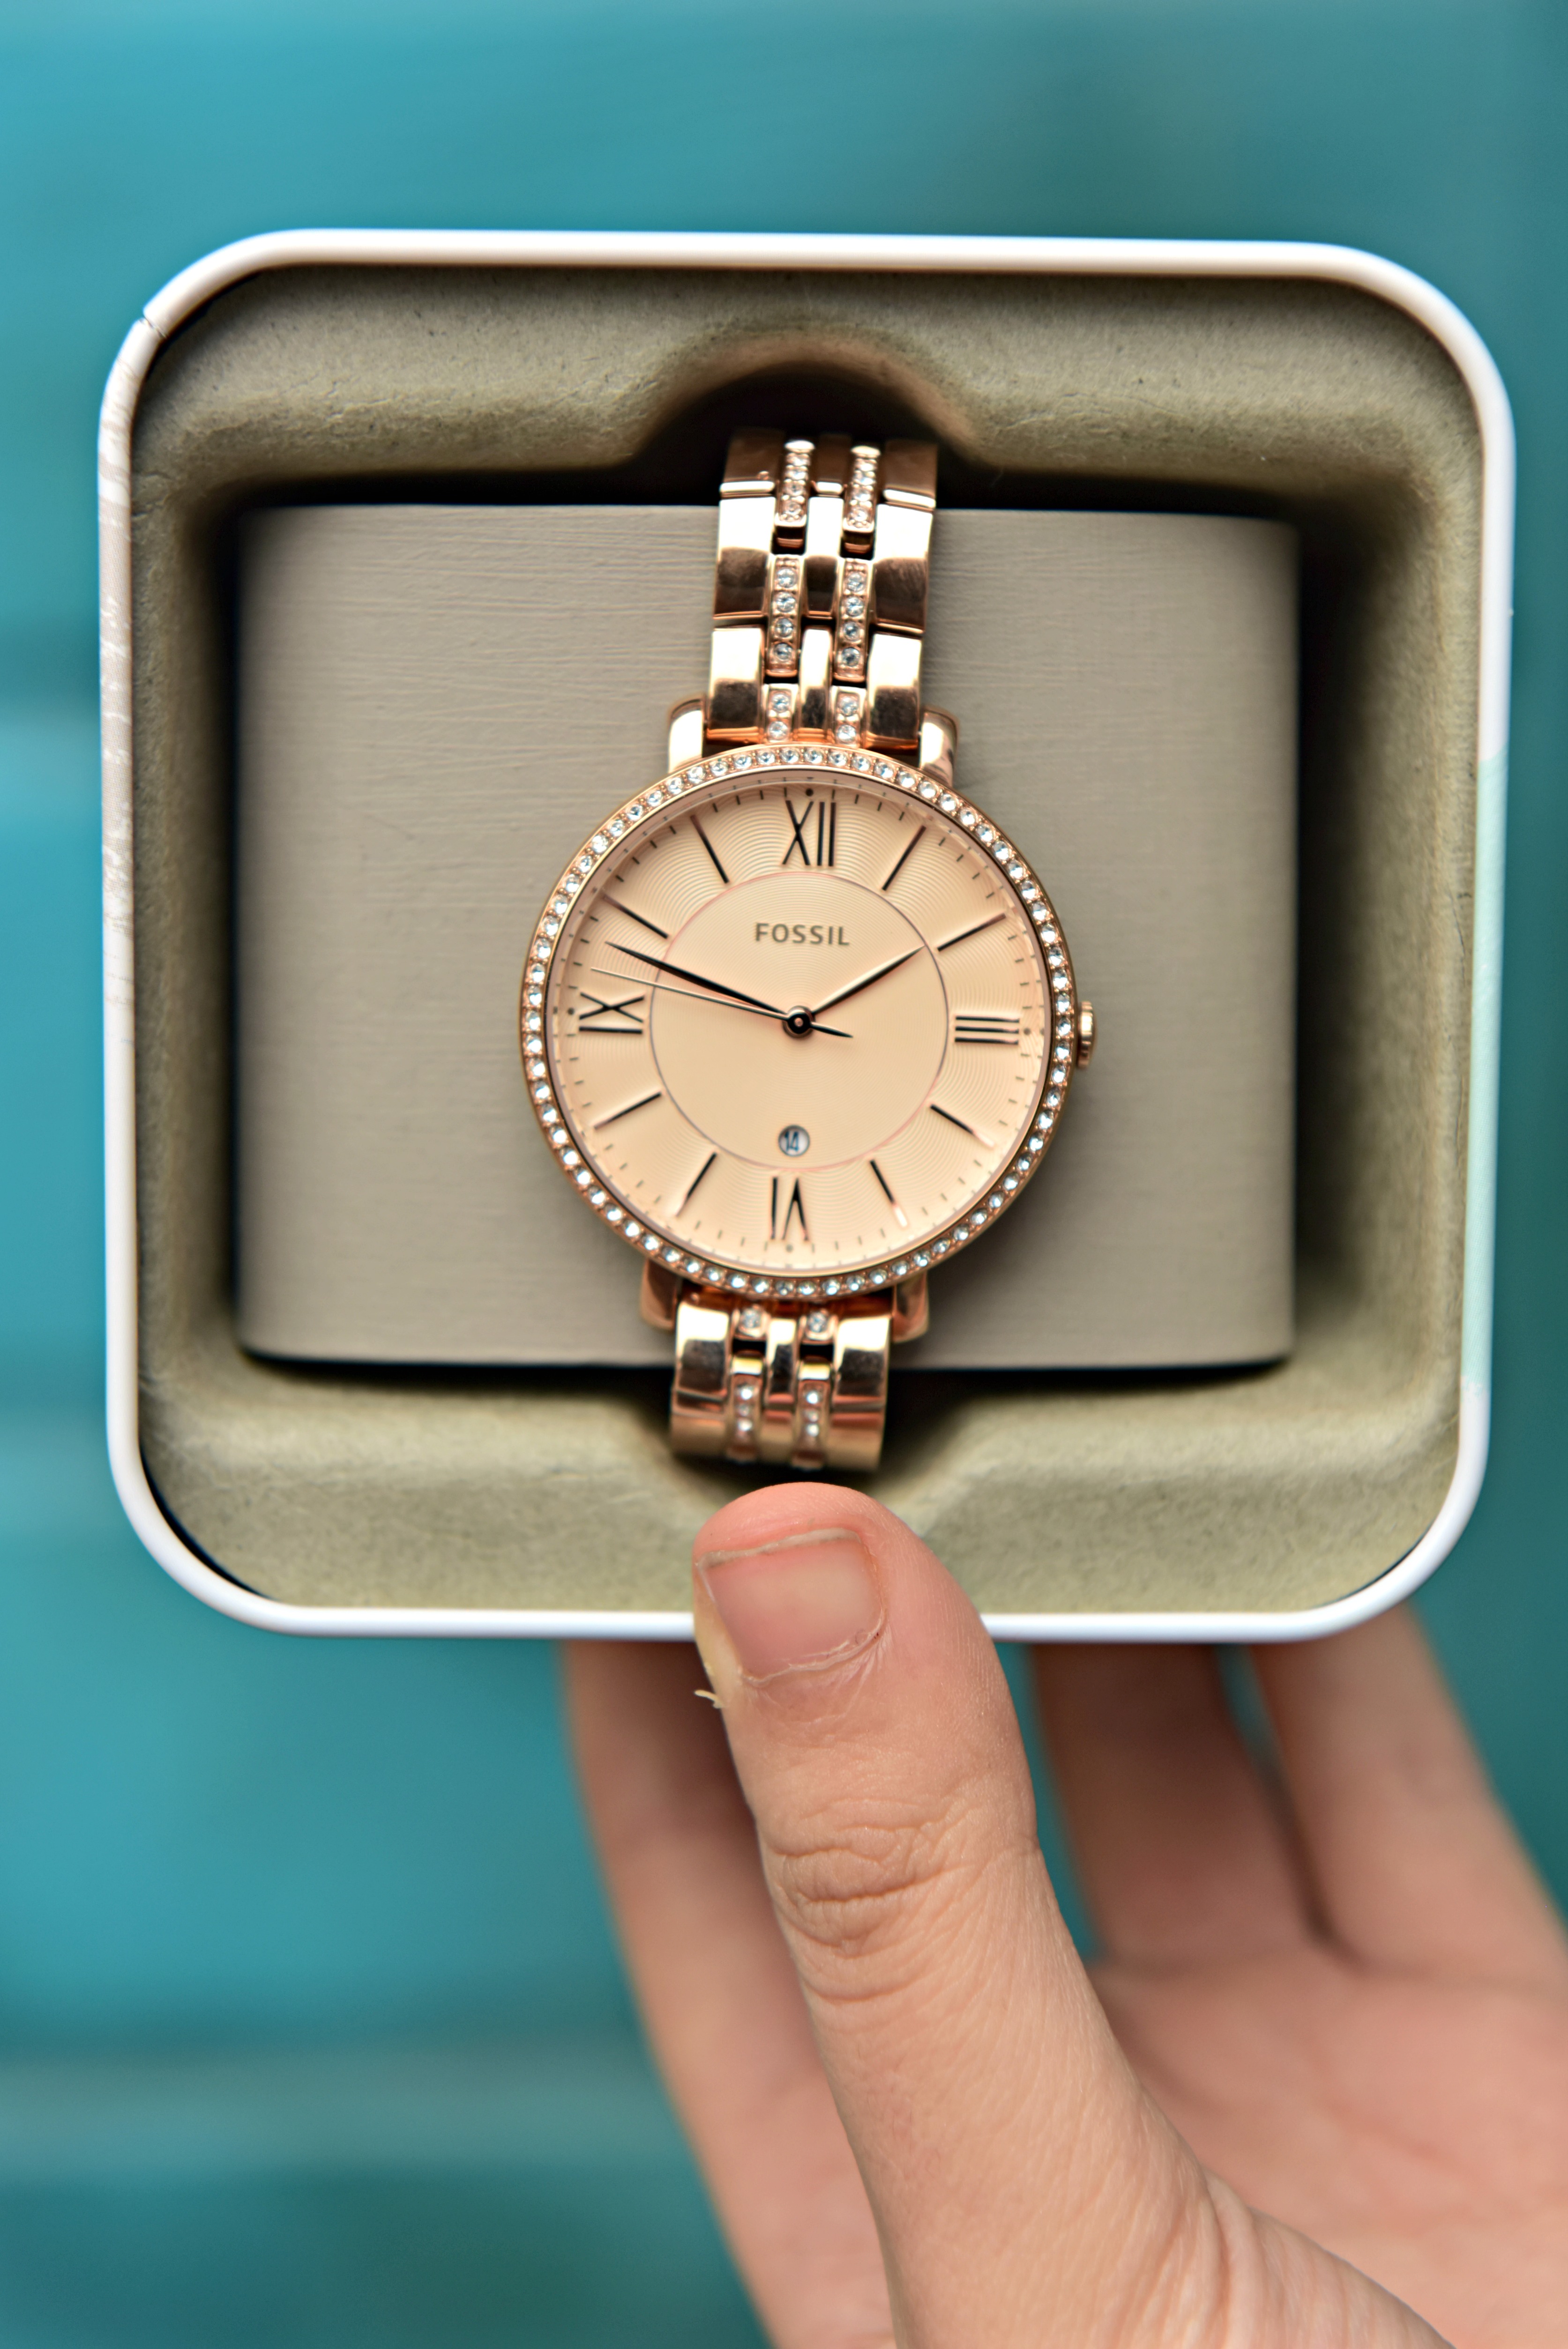 <img src="ana.jpg" alt="ana pink rose gold watch fossil"> 